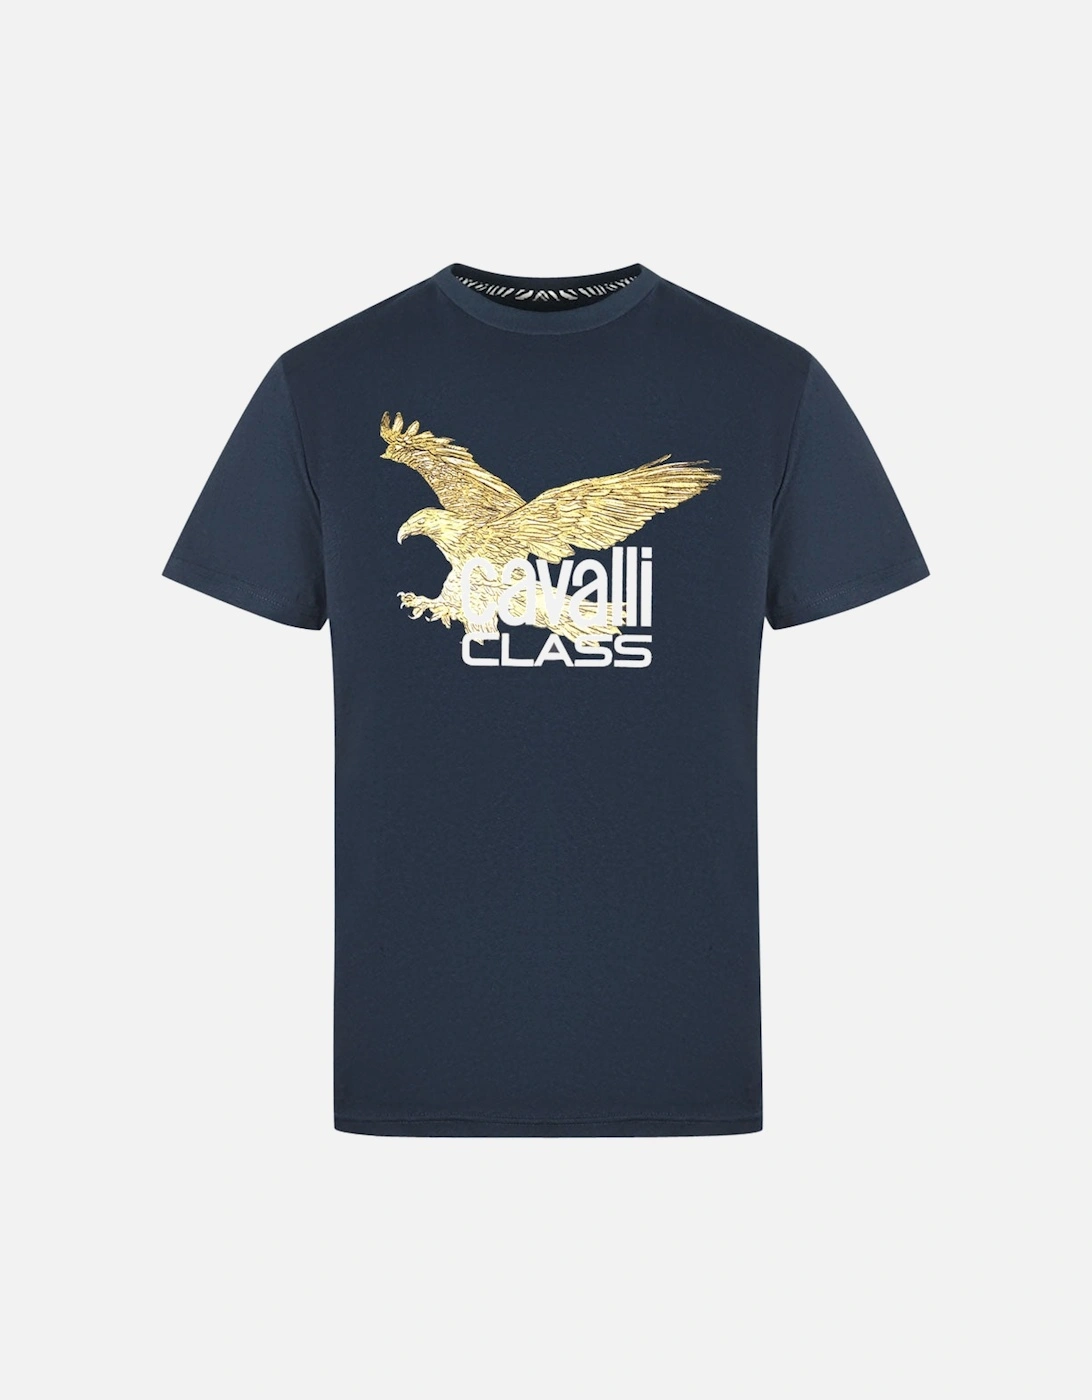 Cavalli Class Gold Eagle Logo Navy T-Shirt, 3 of 2